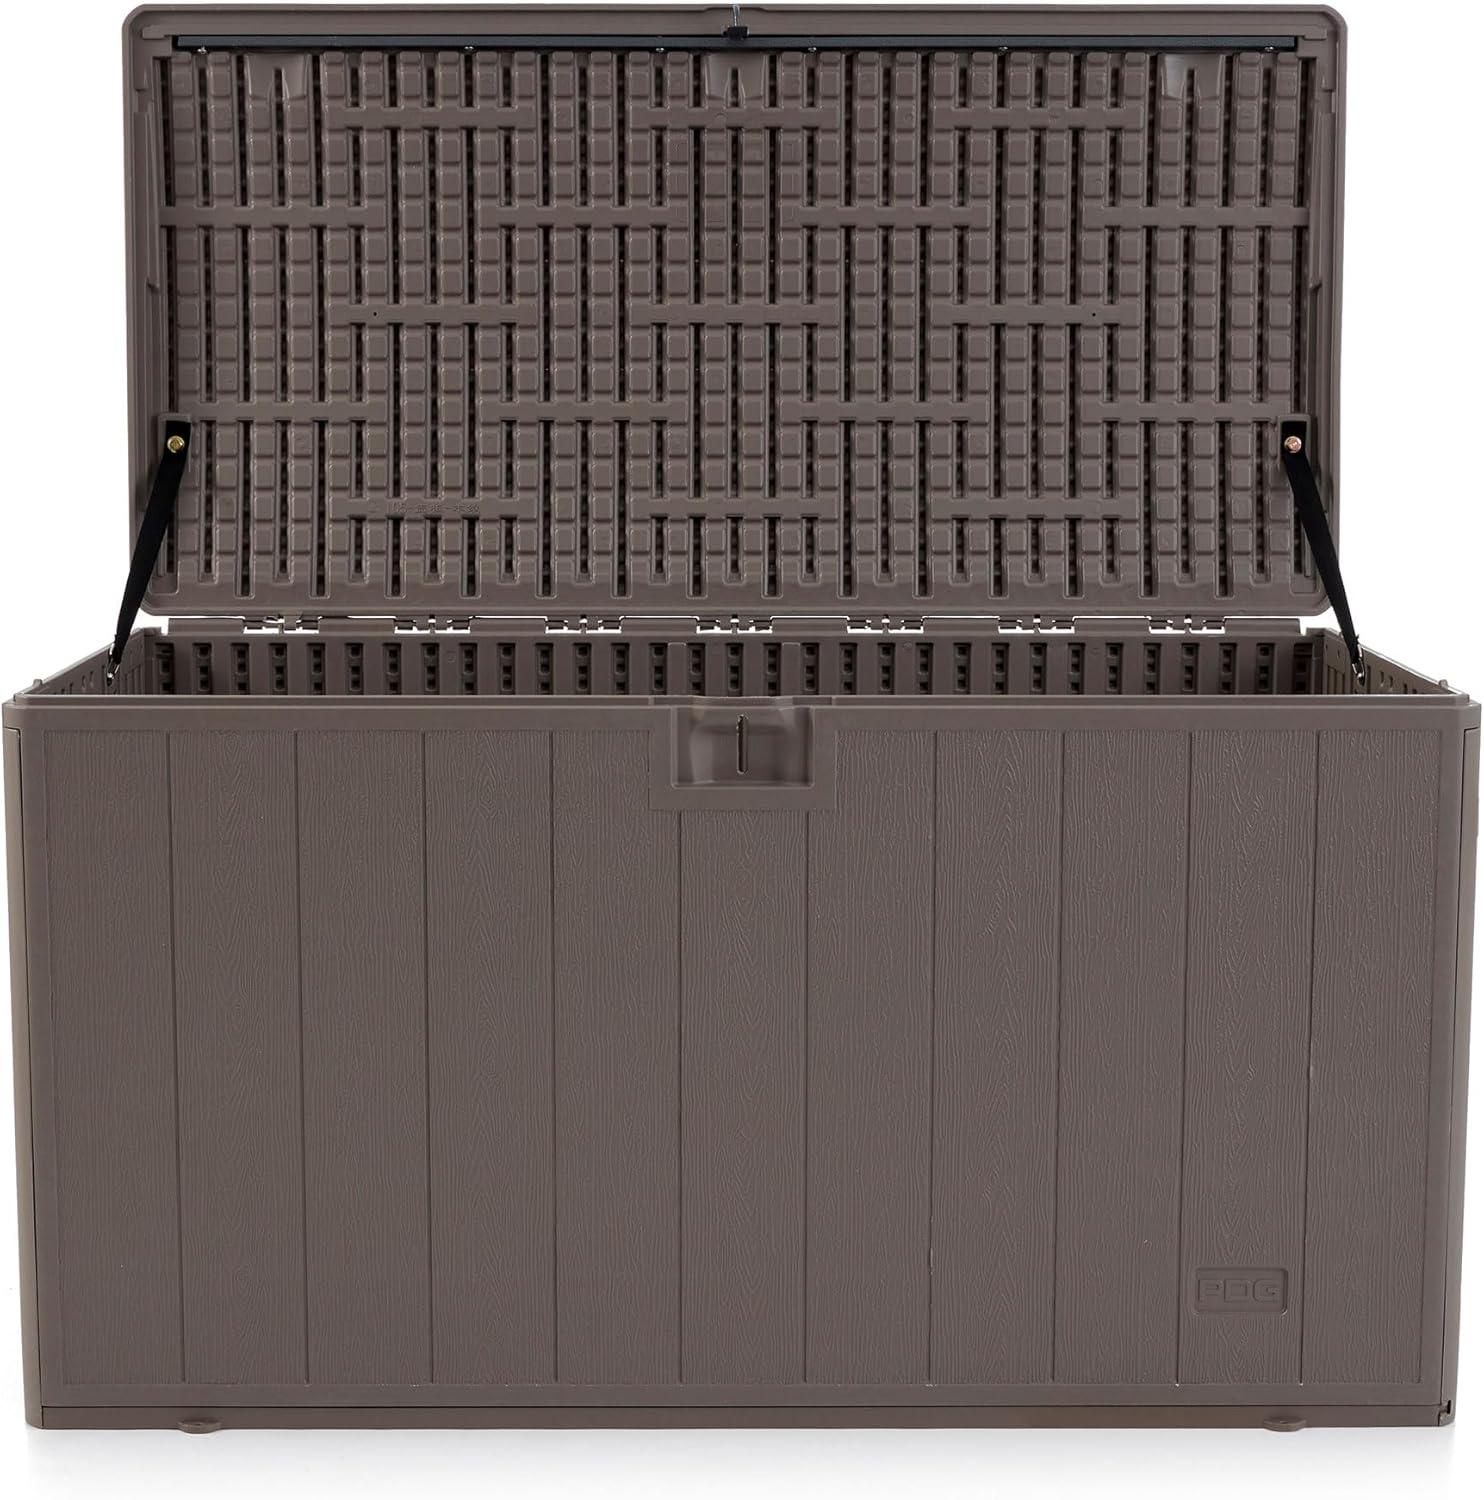 Driftwood Gray 105 Gallon Weatherproof Resin Outdoor Storage Deck Box